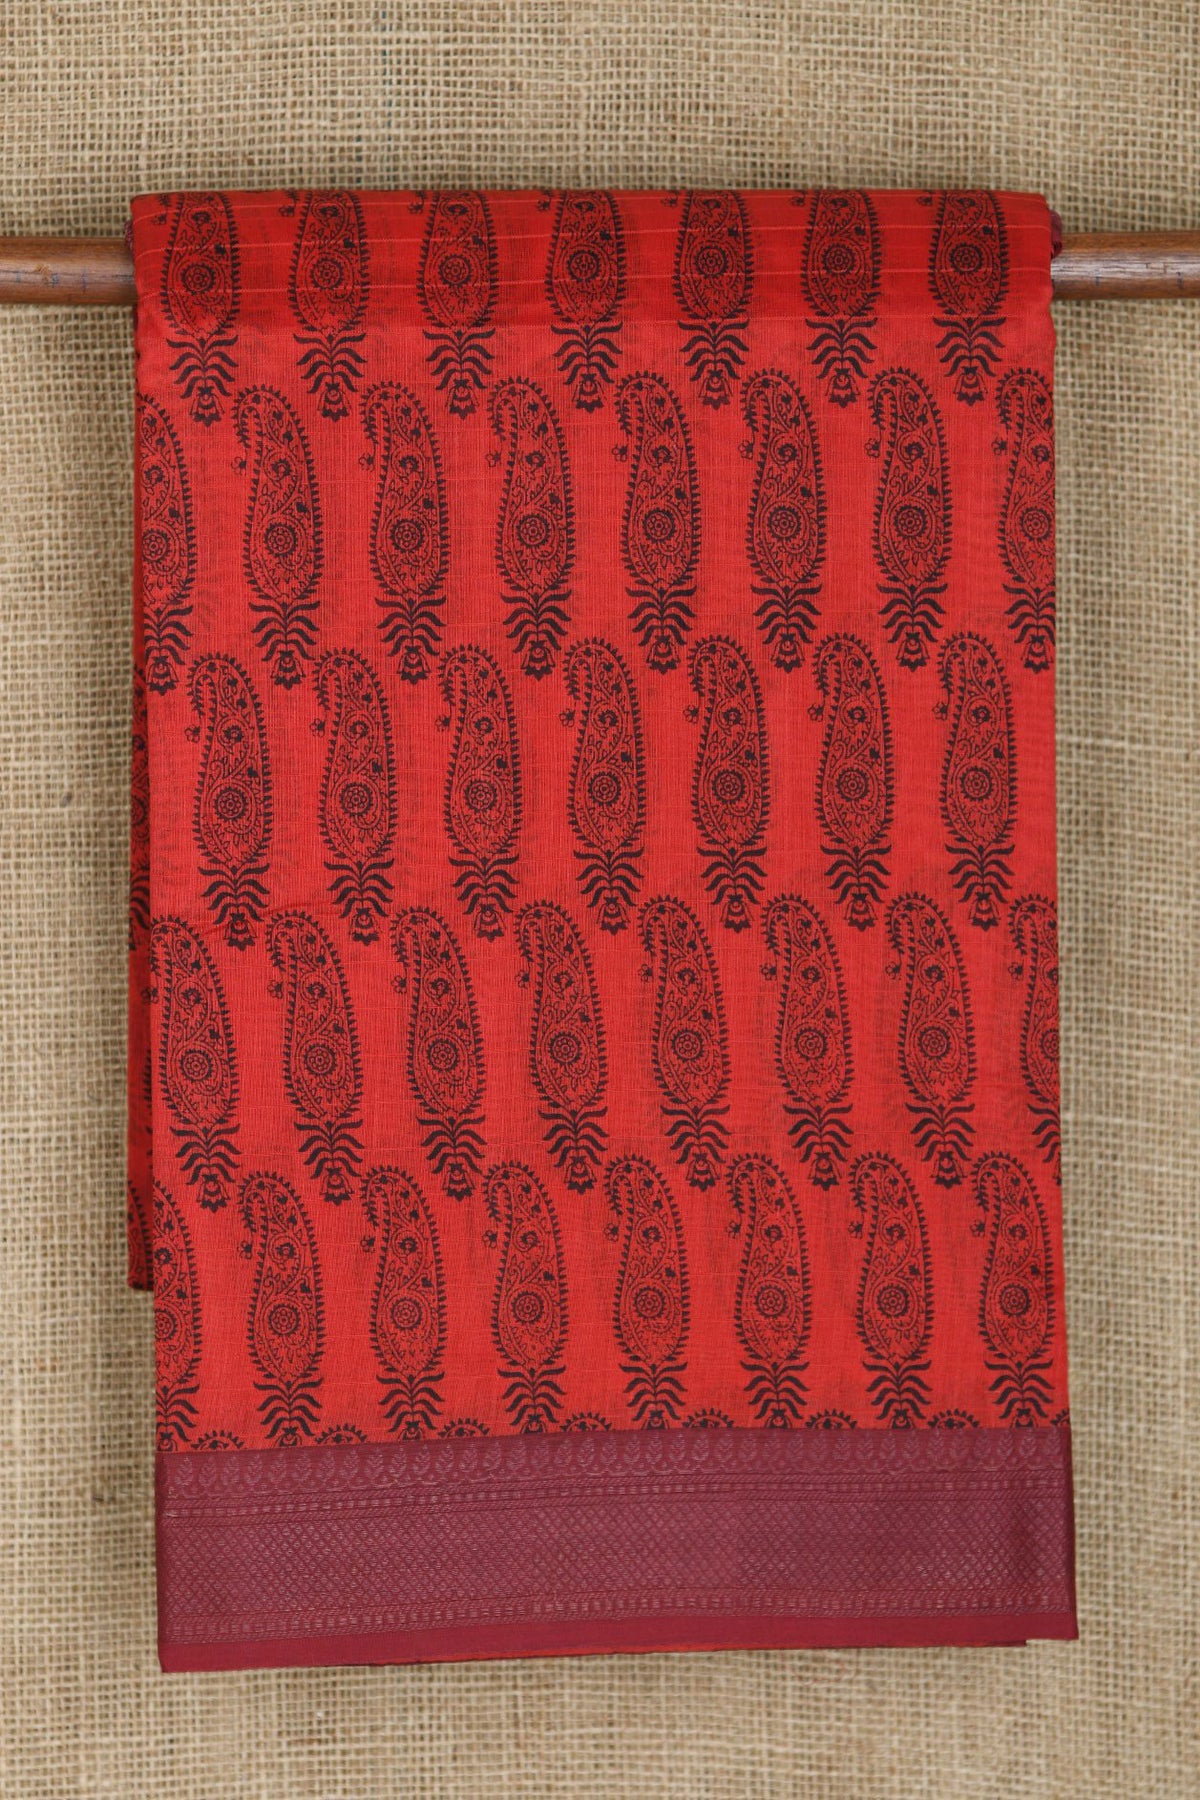 Thread Work Border In Paisley Printed Crimson Red Chanderi Cotton Saree